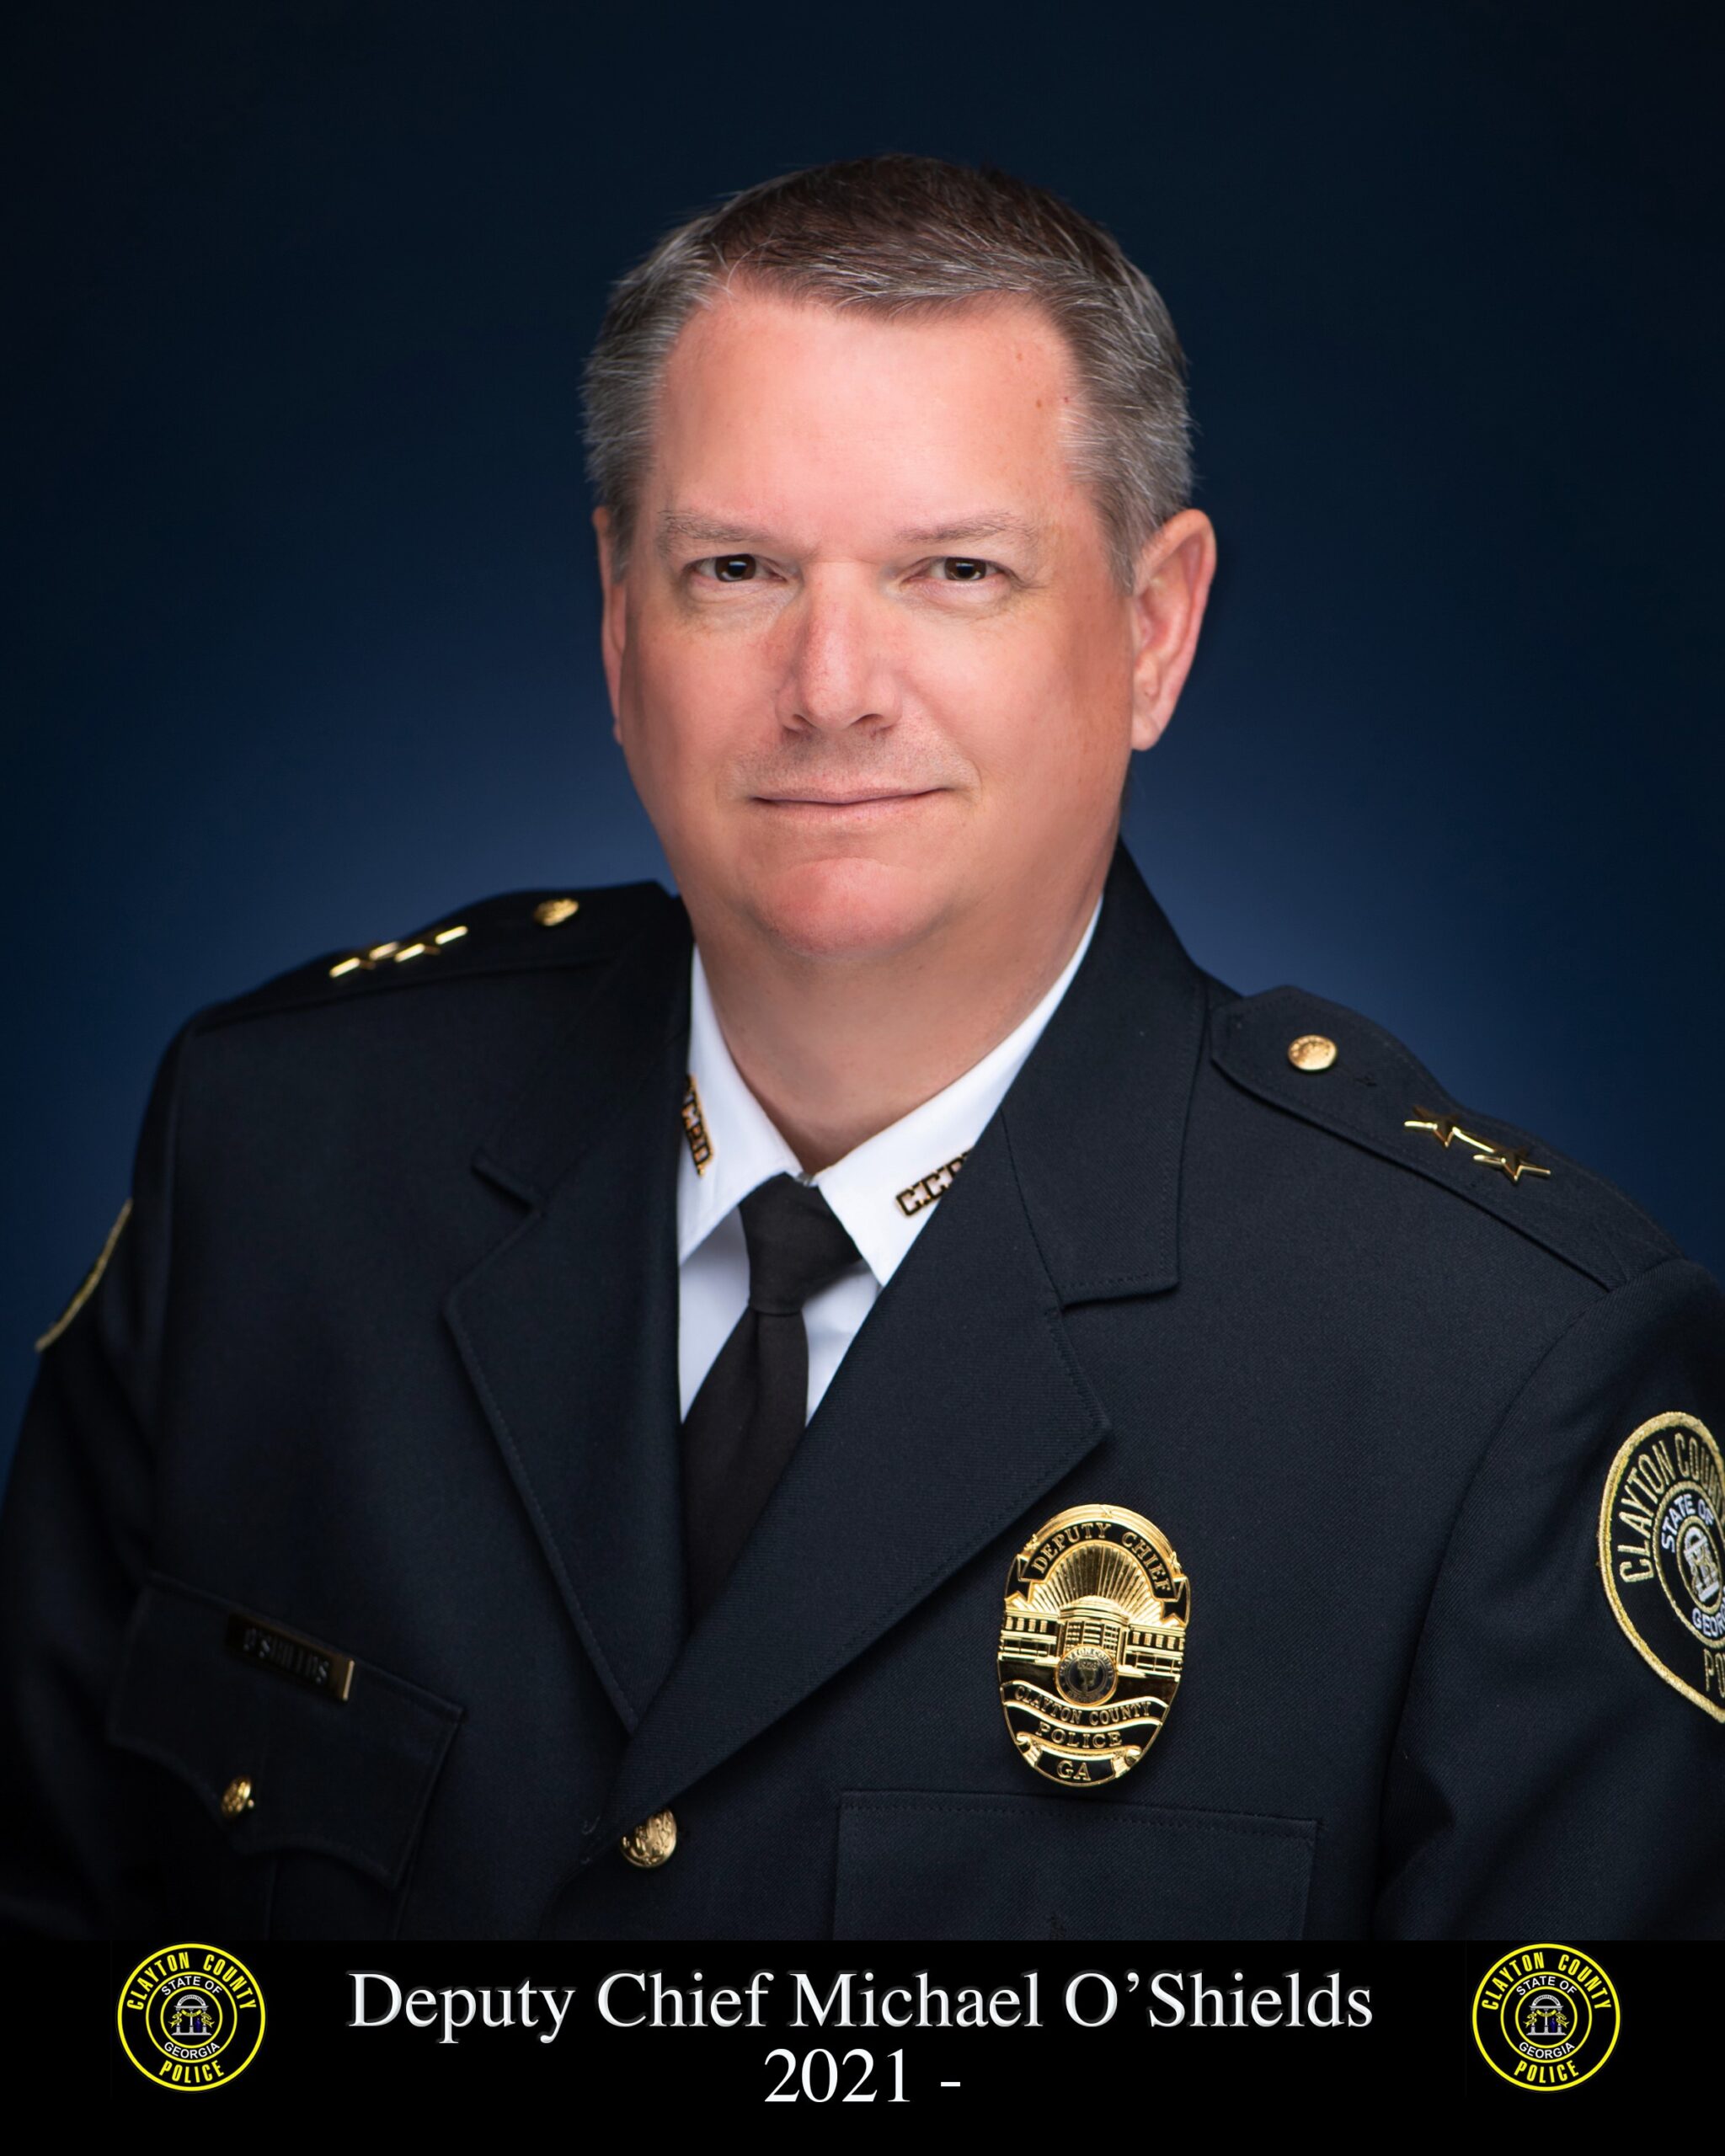 Deputy Chief Michael O'Shields